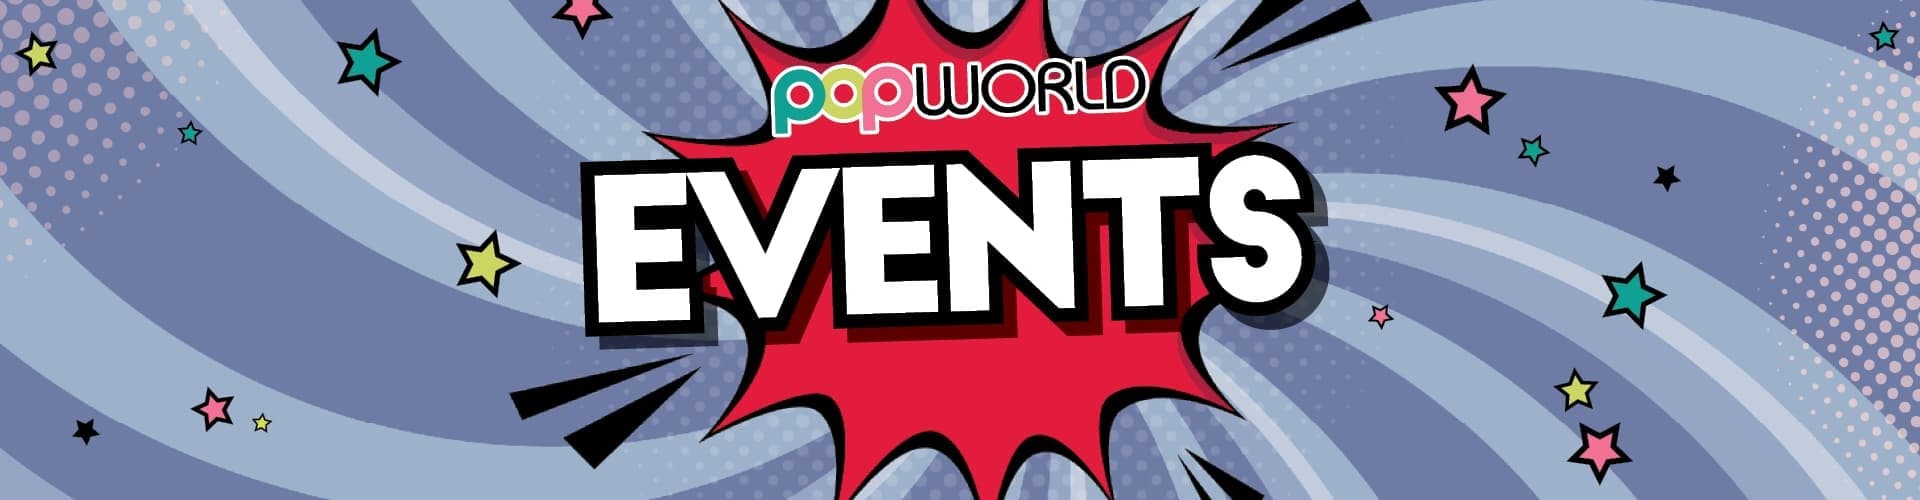 Events at Popworld Norwich